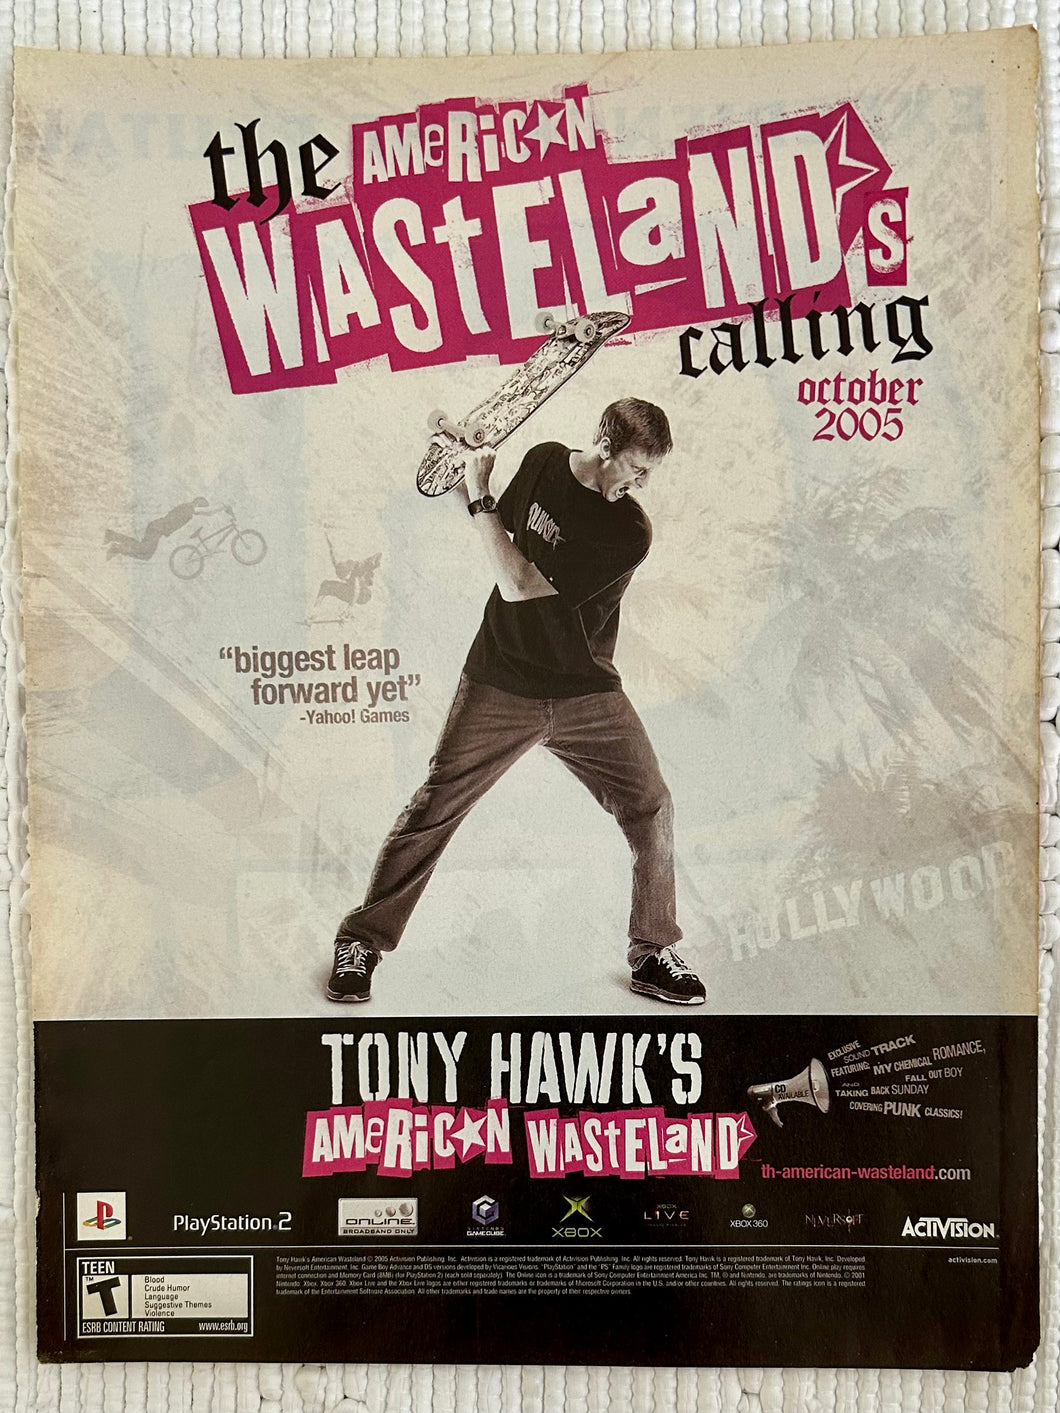 Tony Hawk's American Wasteland - PS2 Xbox 360 NGC - Original Vintage Advertisement - Print Ads - Laminated A4 Poster